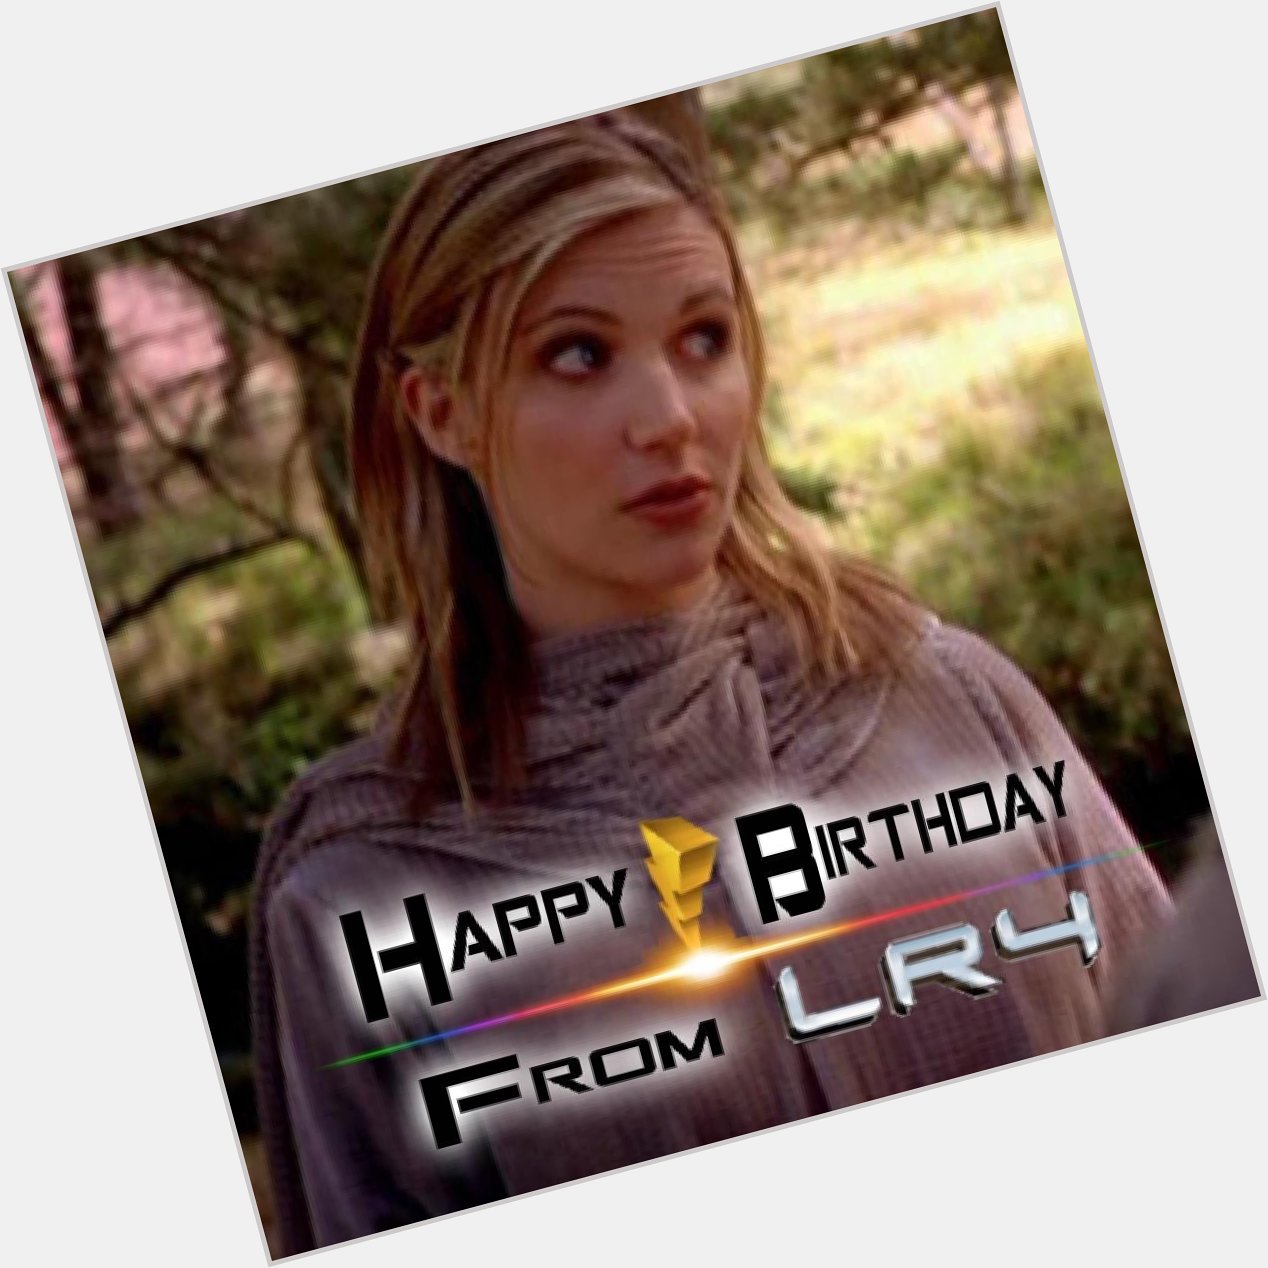 LR4 would like to wish Beth Allen a Happy Birthday! 